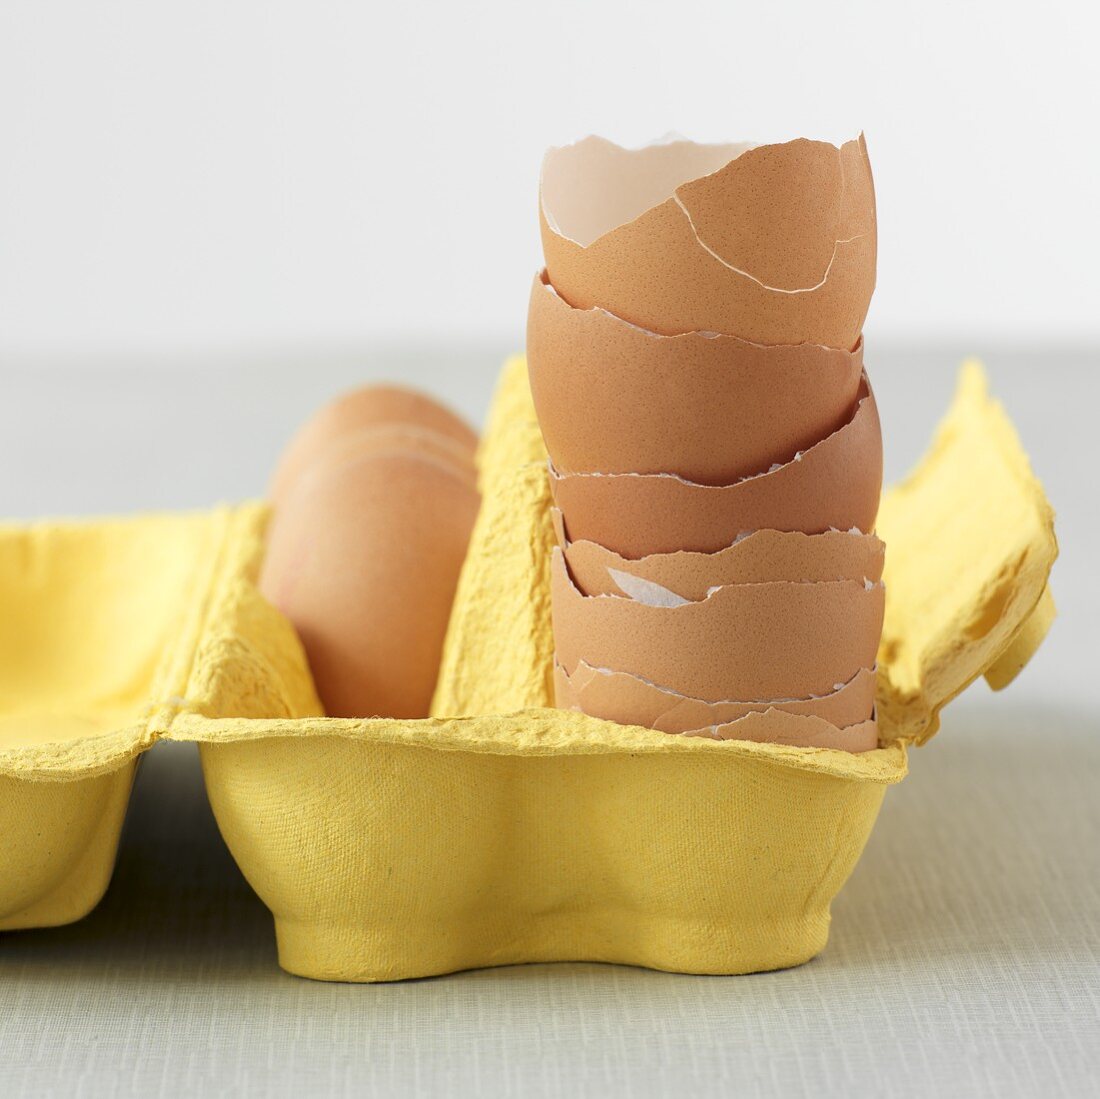 Gestapelte Eierschalen in gelber Eierschachtel